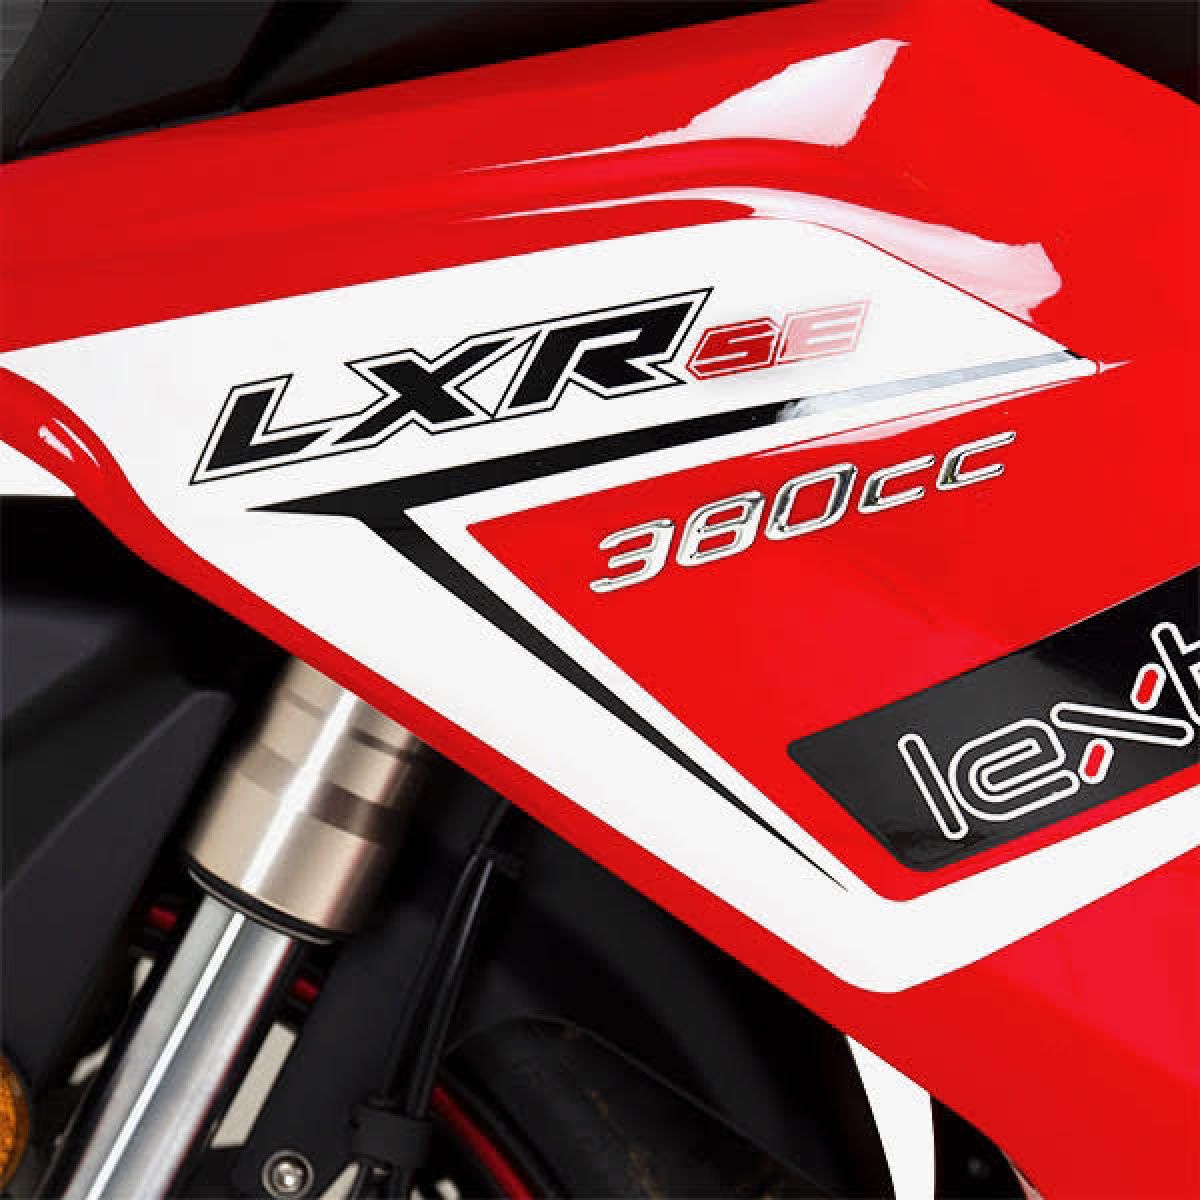 Lexmoto LXR 380 sports bike